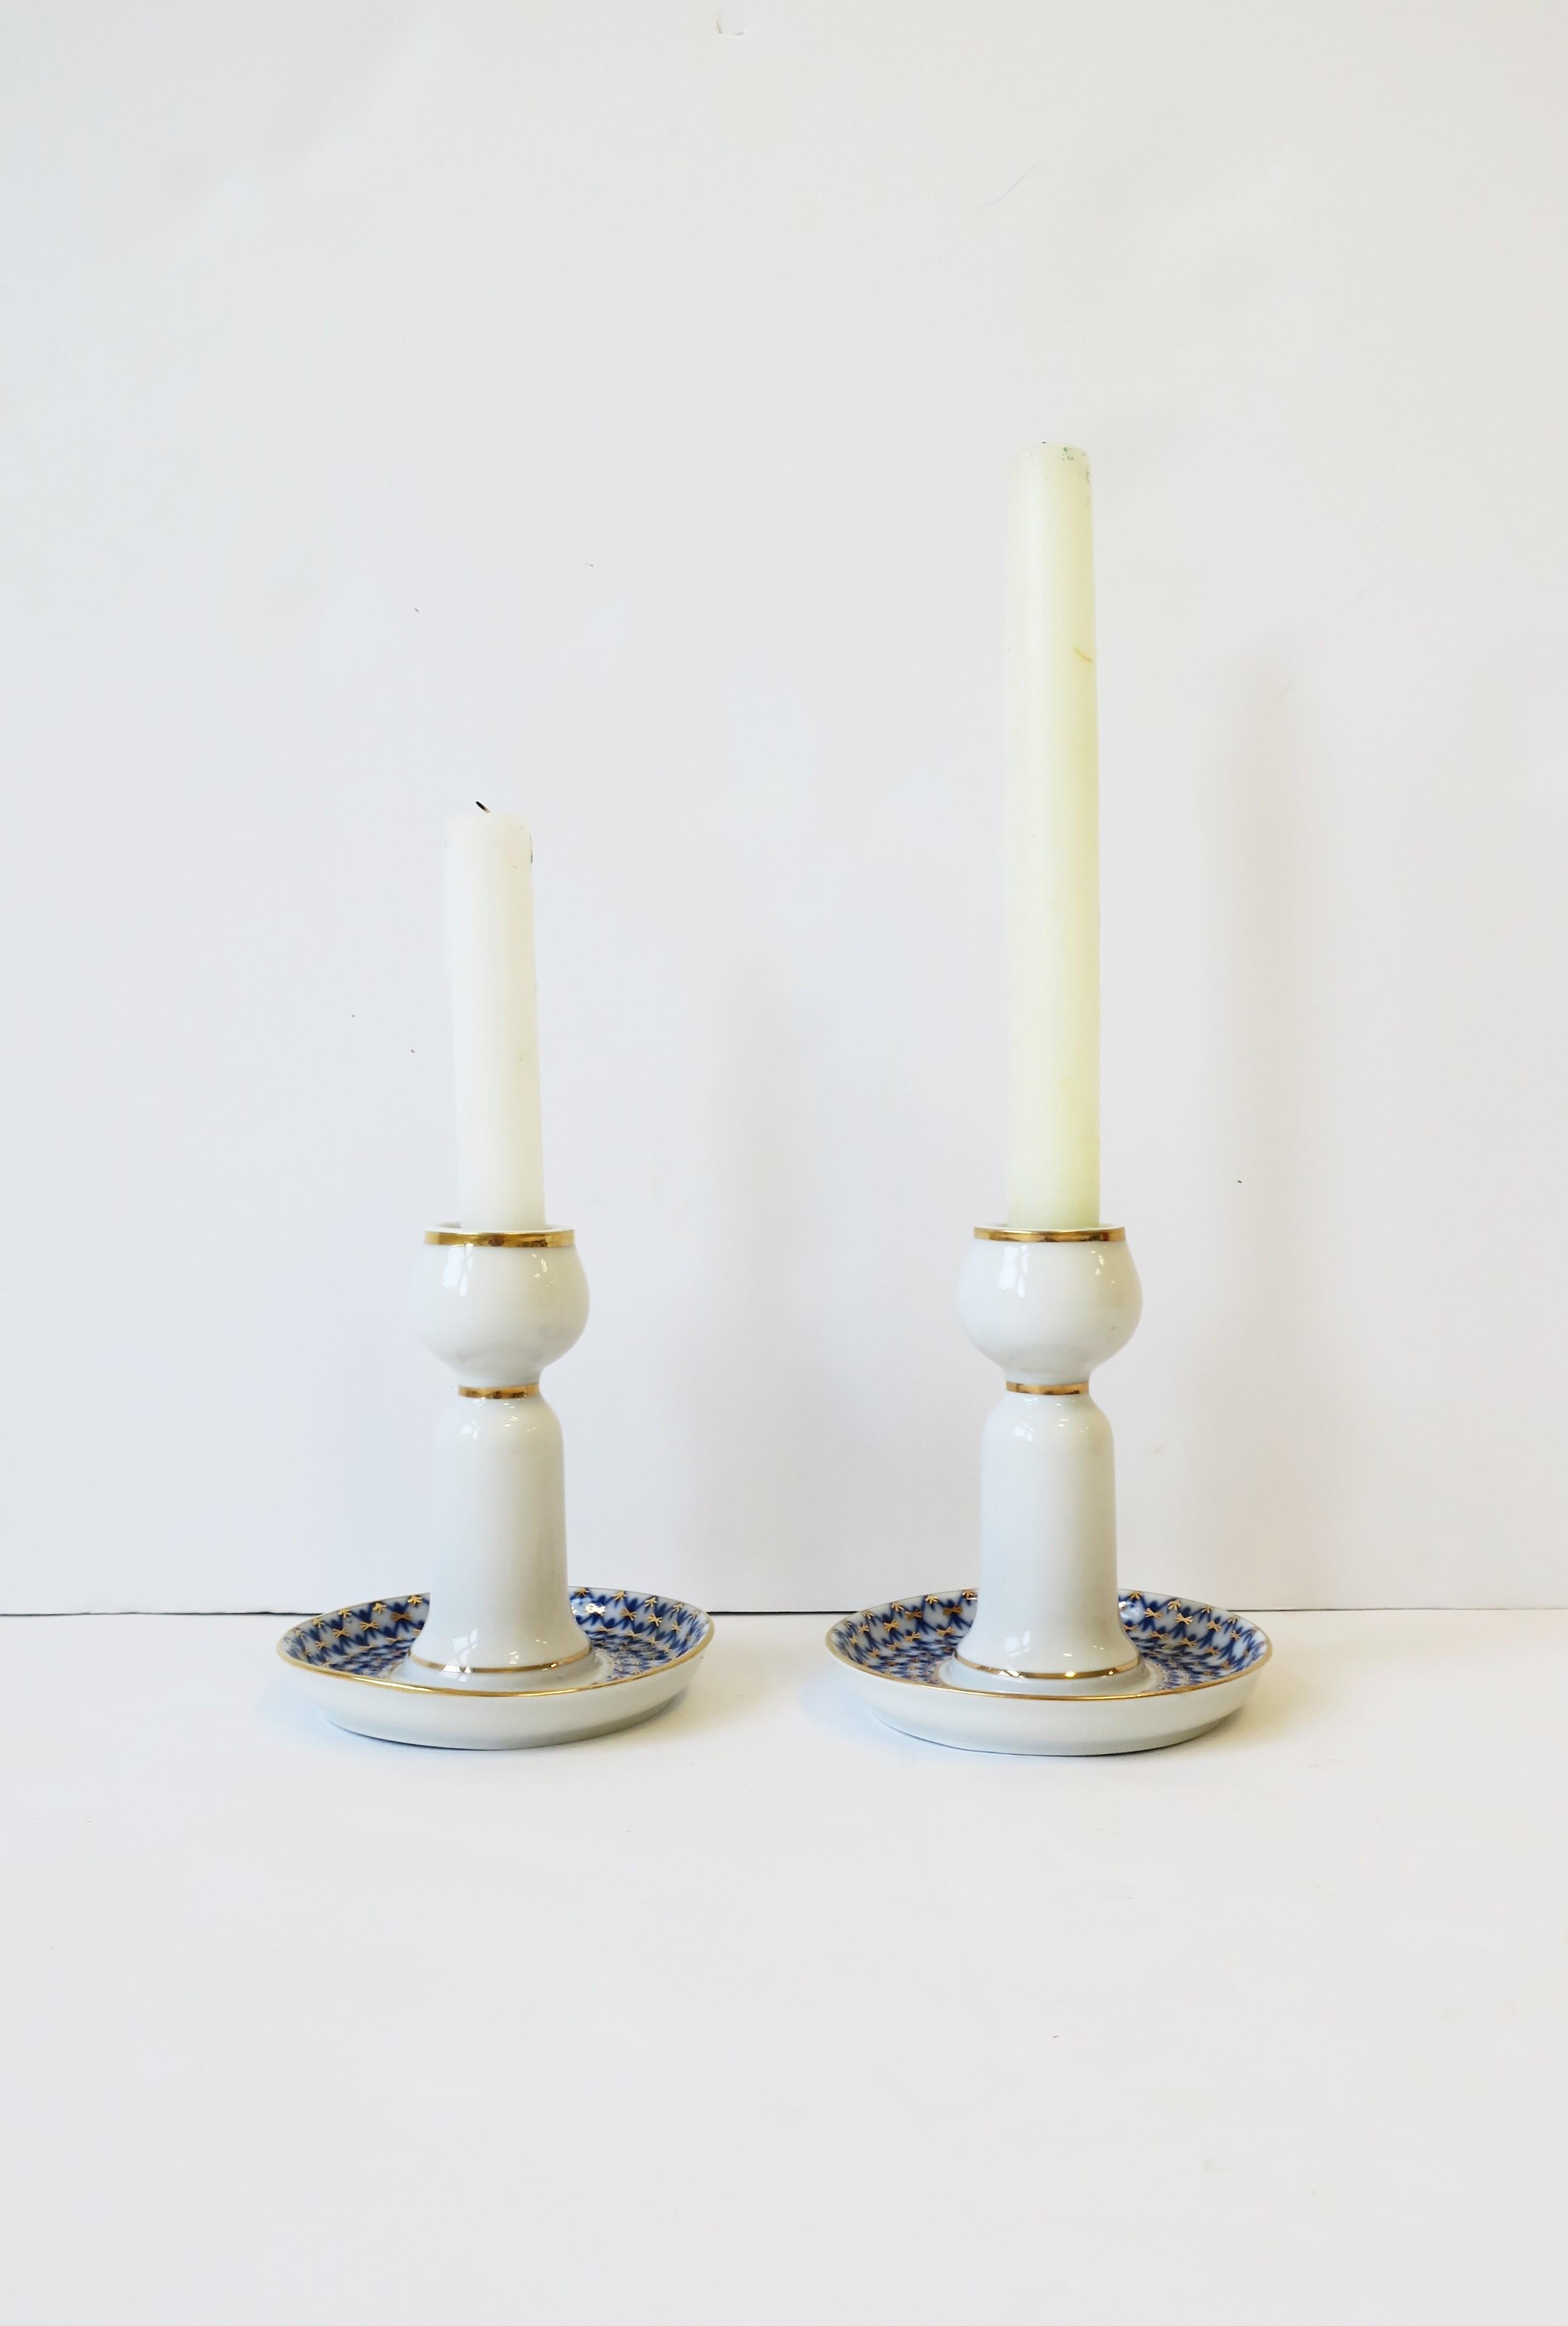 20th Century Russian Lomonosov Blue Gold White Porcelain Candlesticks Holders, Pair For Sale